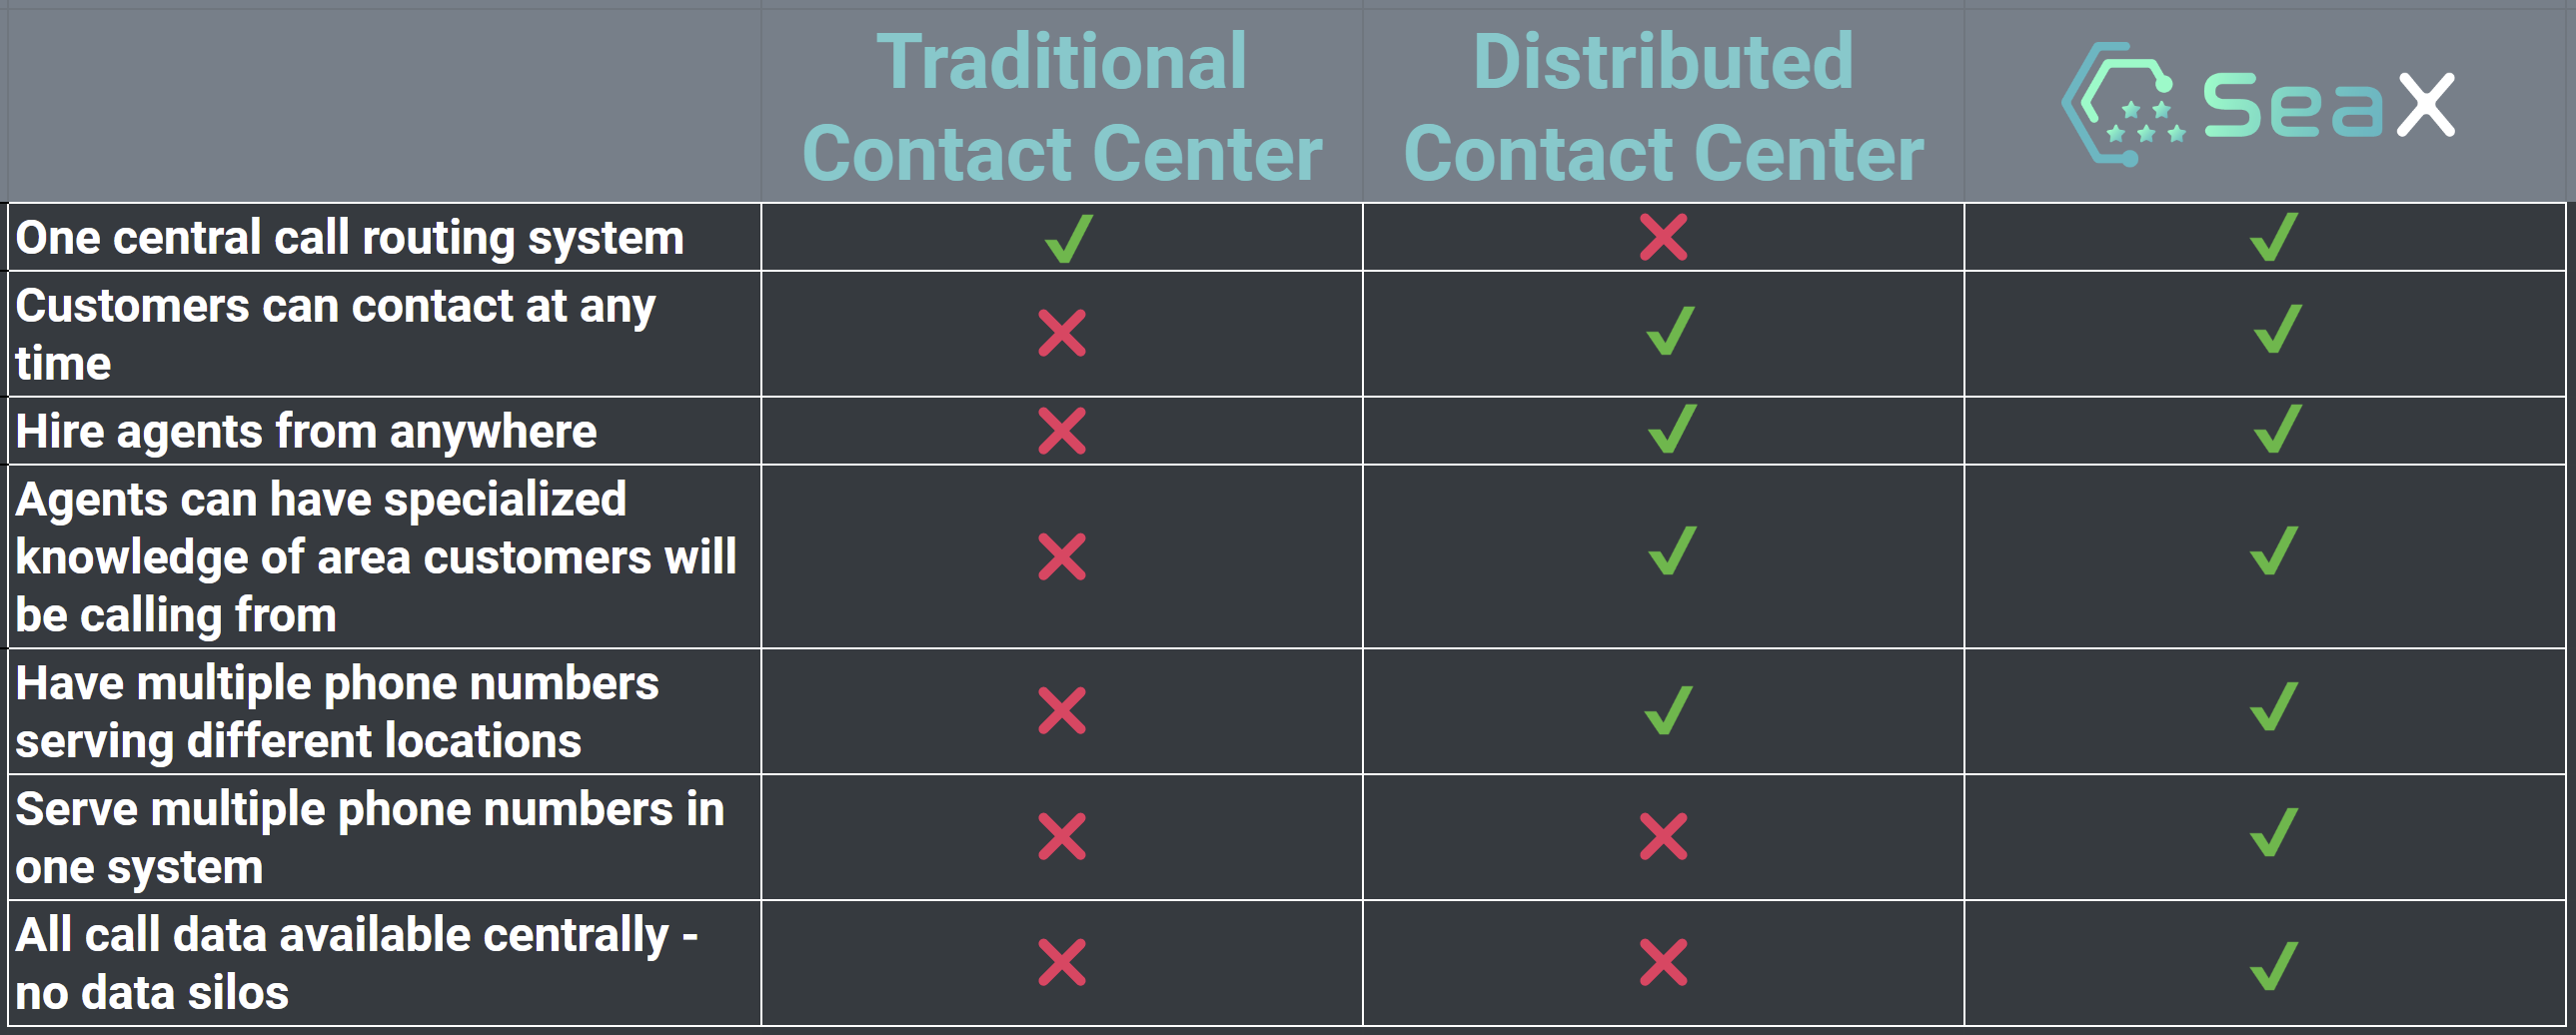 Feature comparison: traditional call center vs distributed contact center vs SeaX.